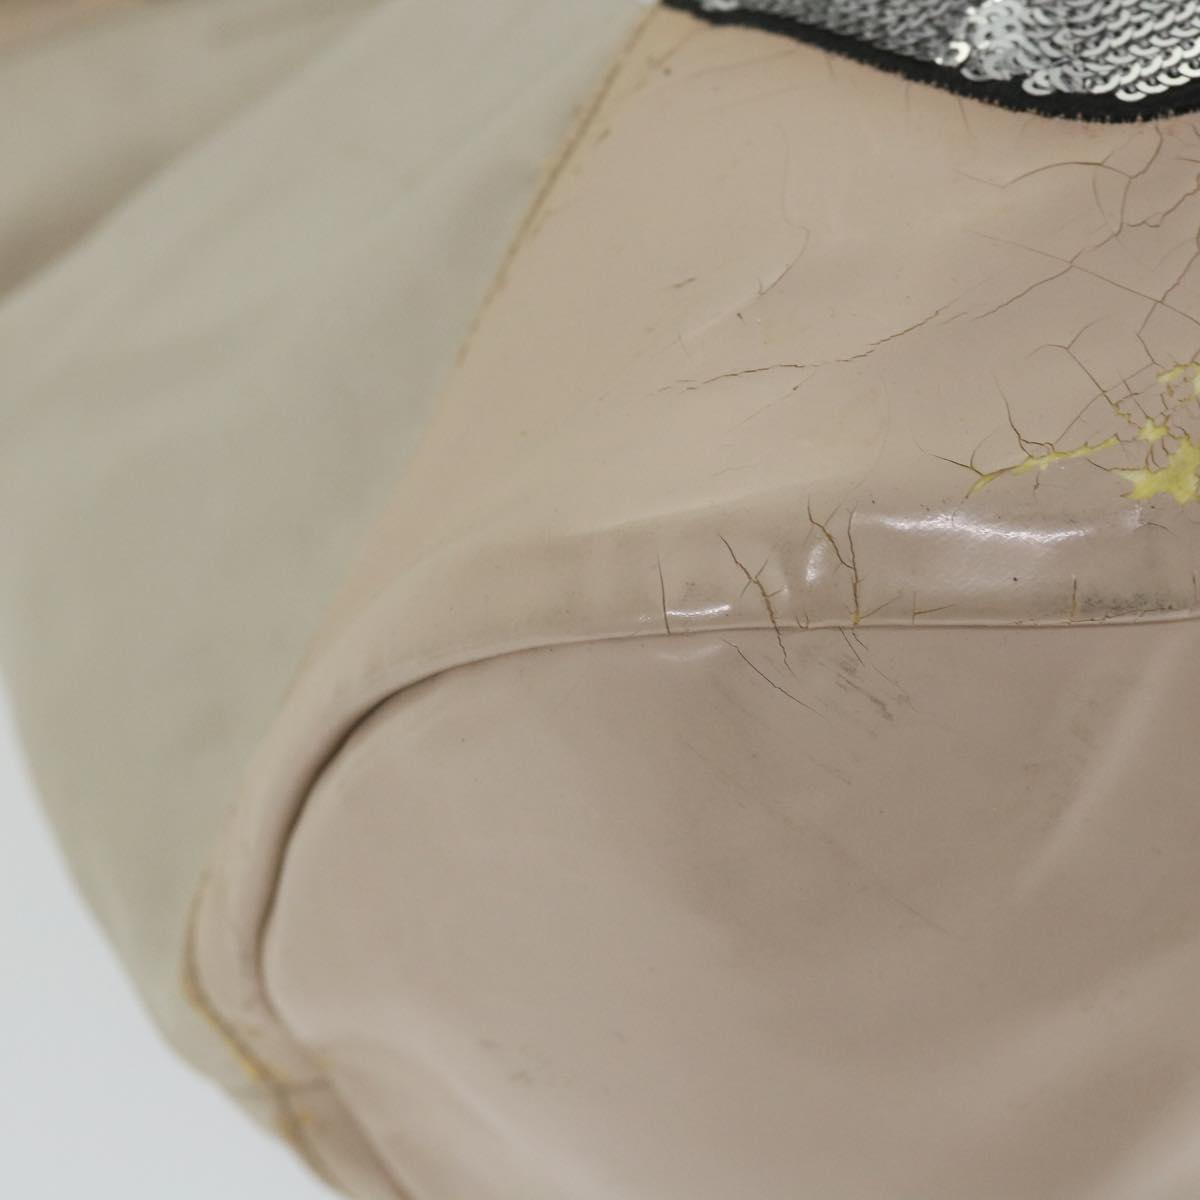 Salvatore Ferragamo Shoulder Bag Nylon patent leather Beige Auth ti1318